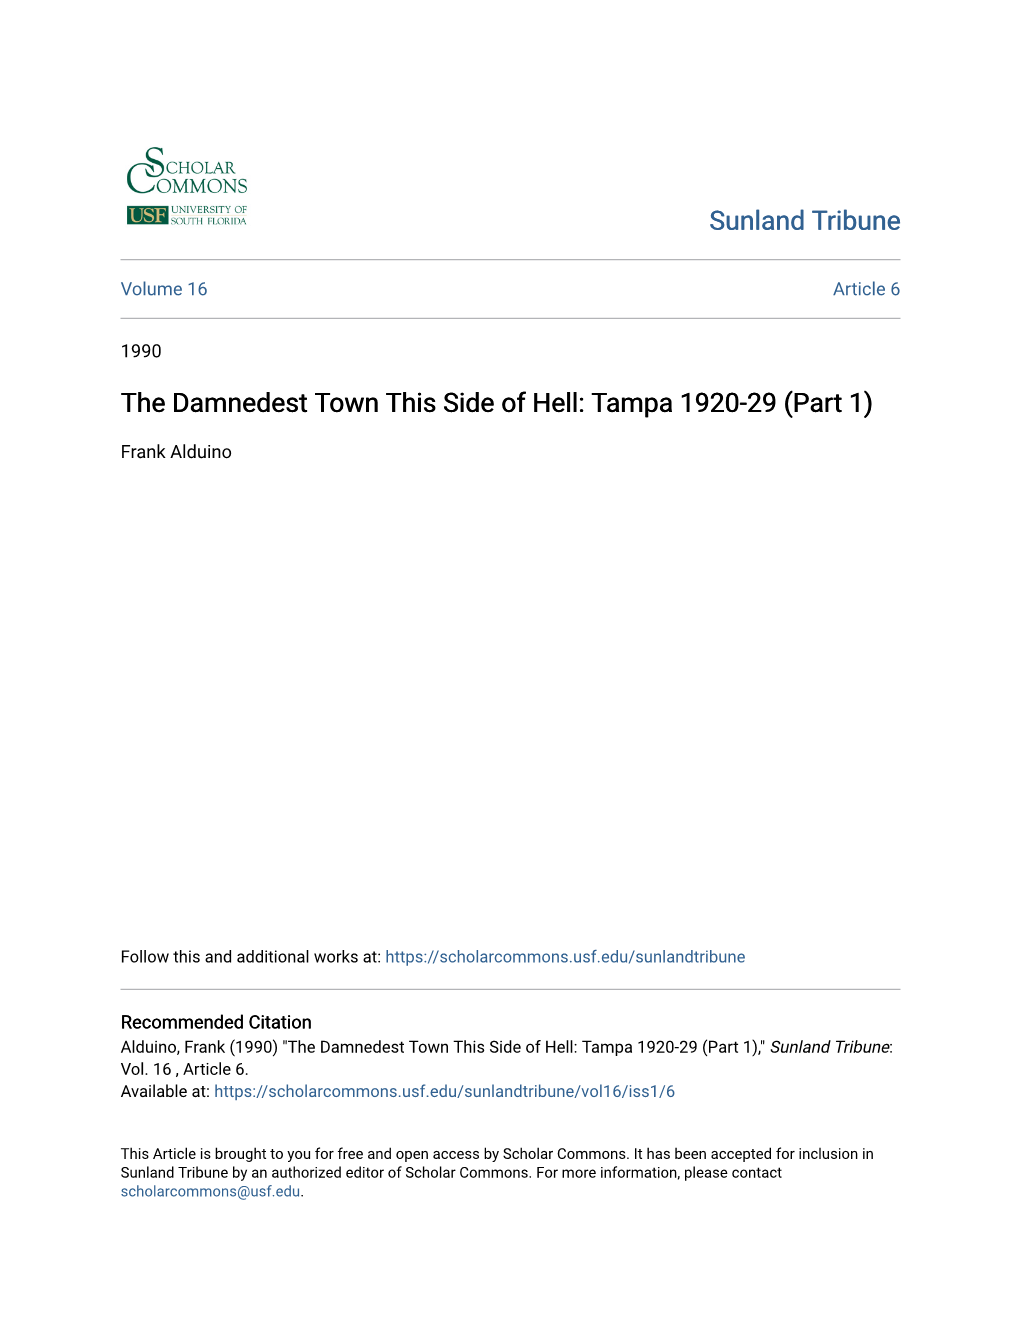 Tampa 1920-29 (Part 1)